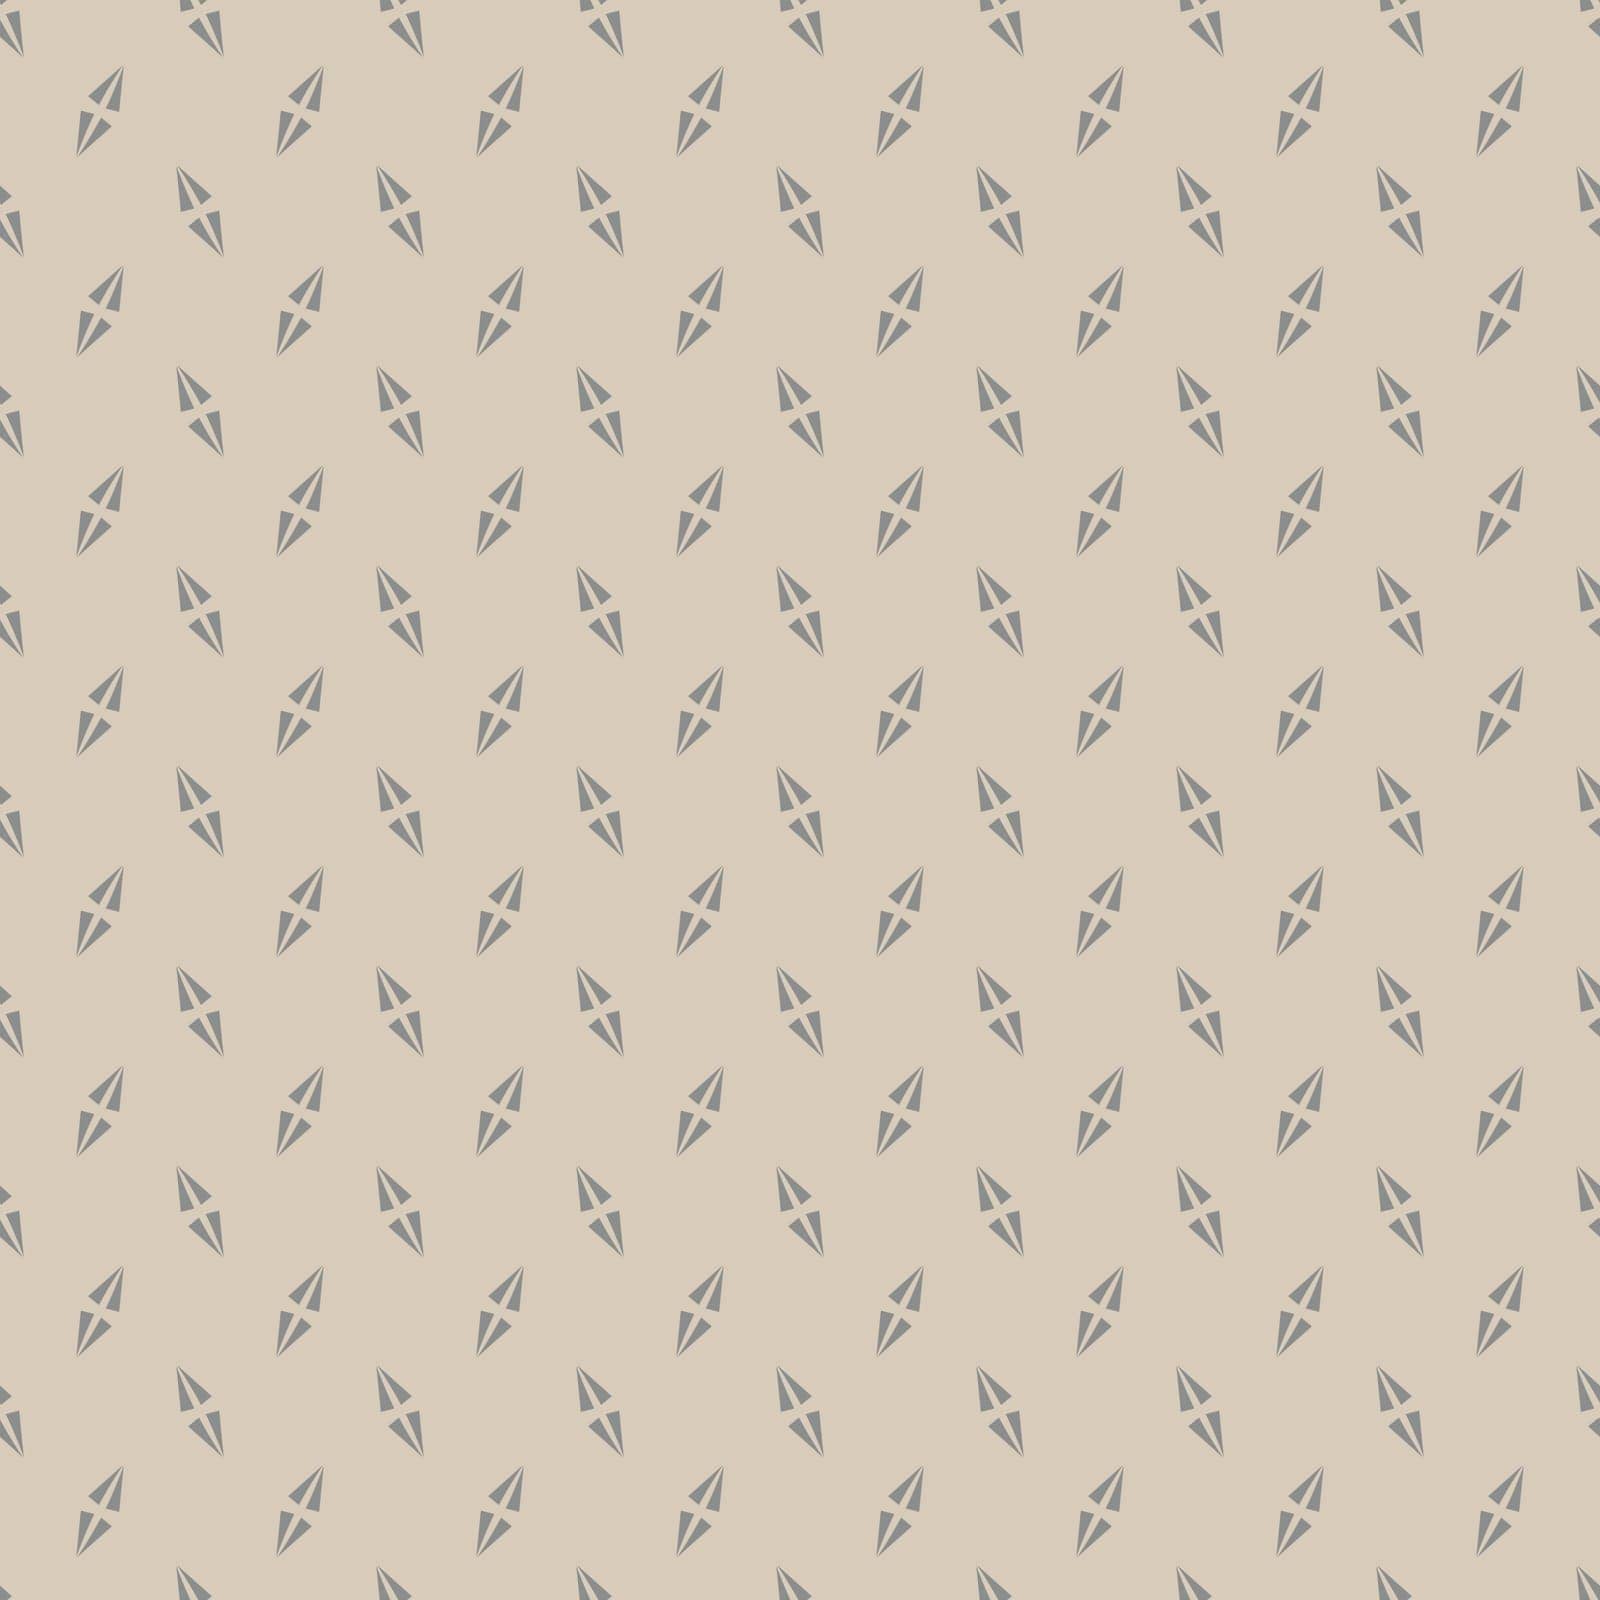 Elegant masculine common geometric motif pattern by Deepika_Praveen